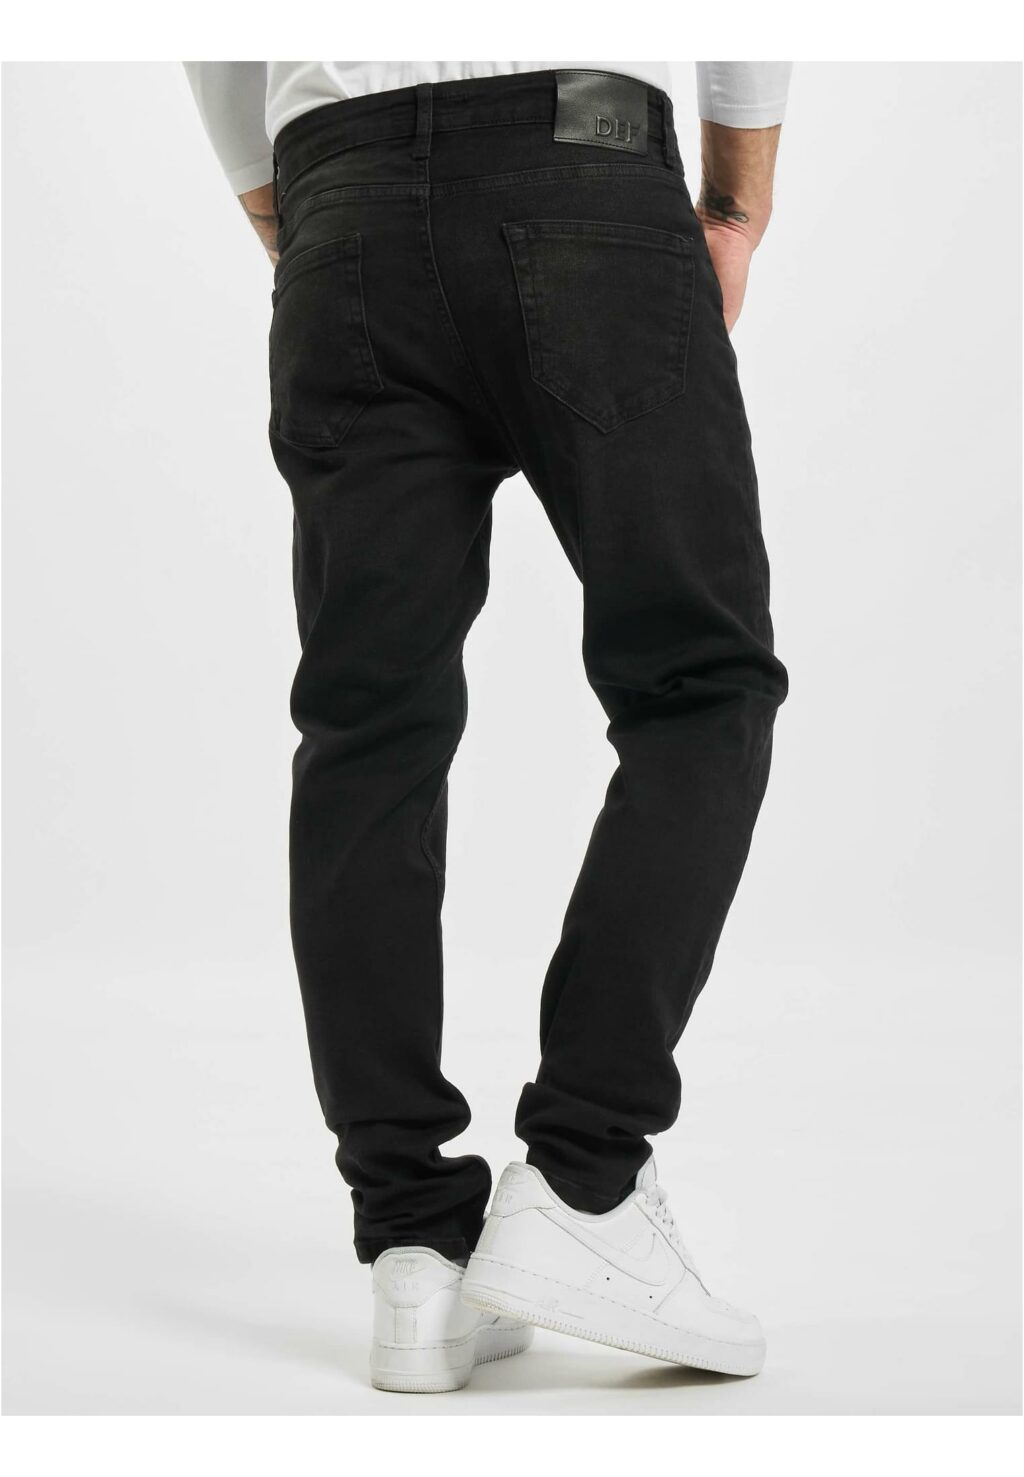 Rick Slim Fit Jeans black DFJS090